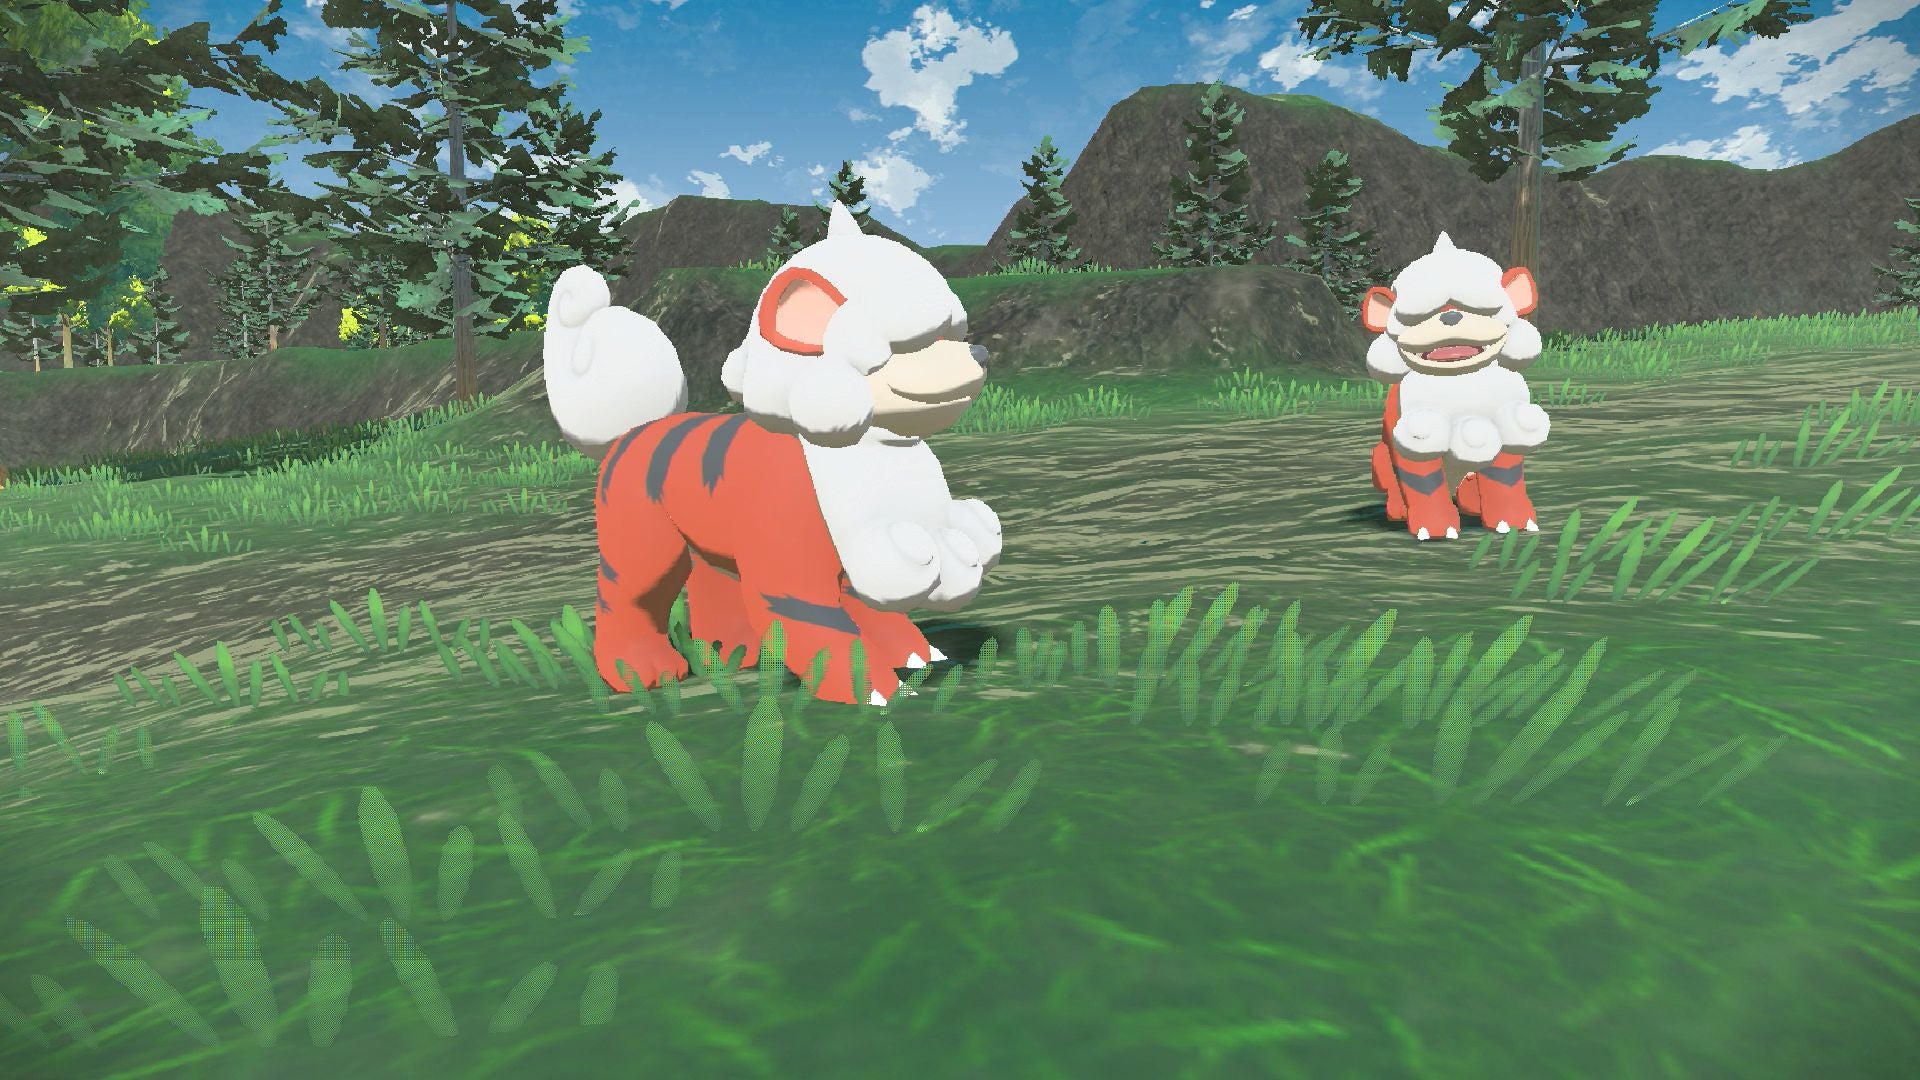 Screenshot: The Pokémon Company